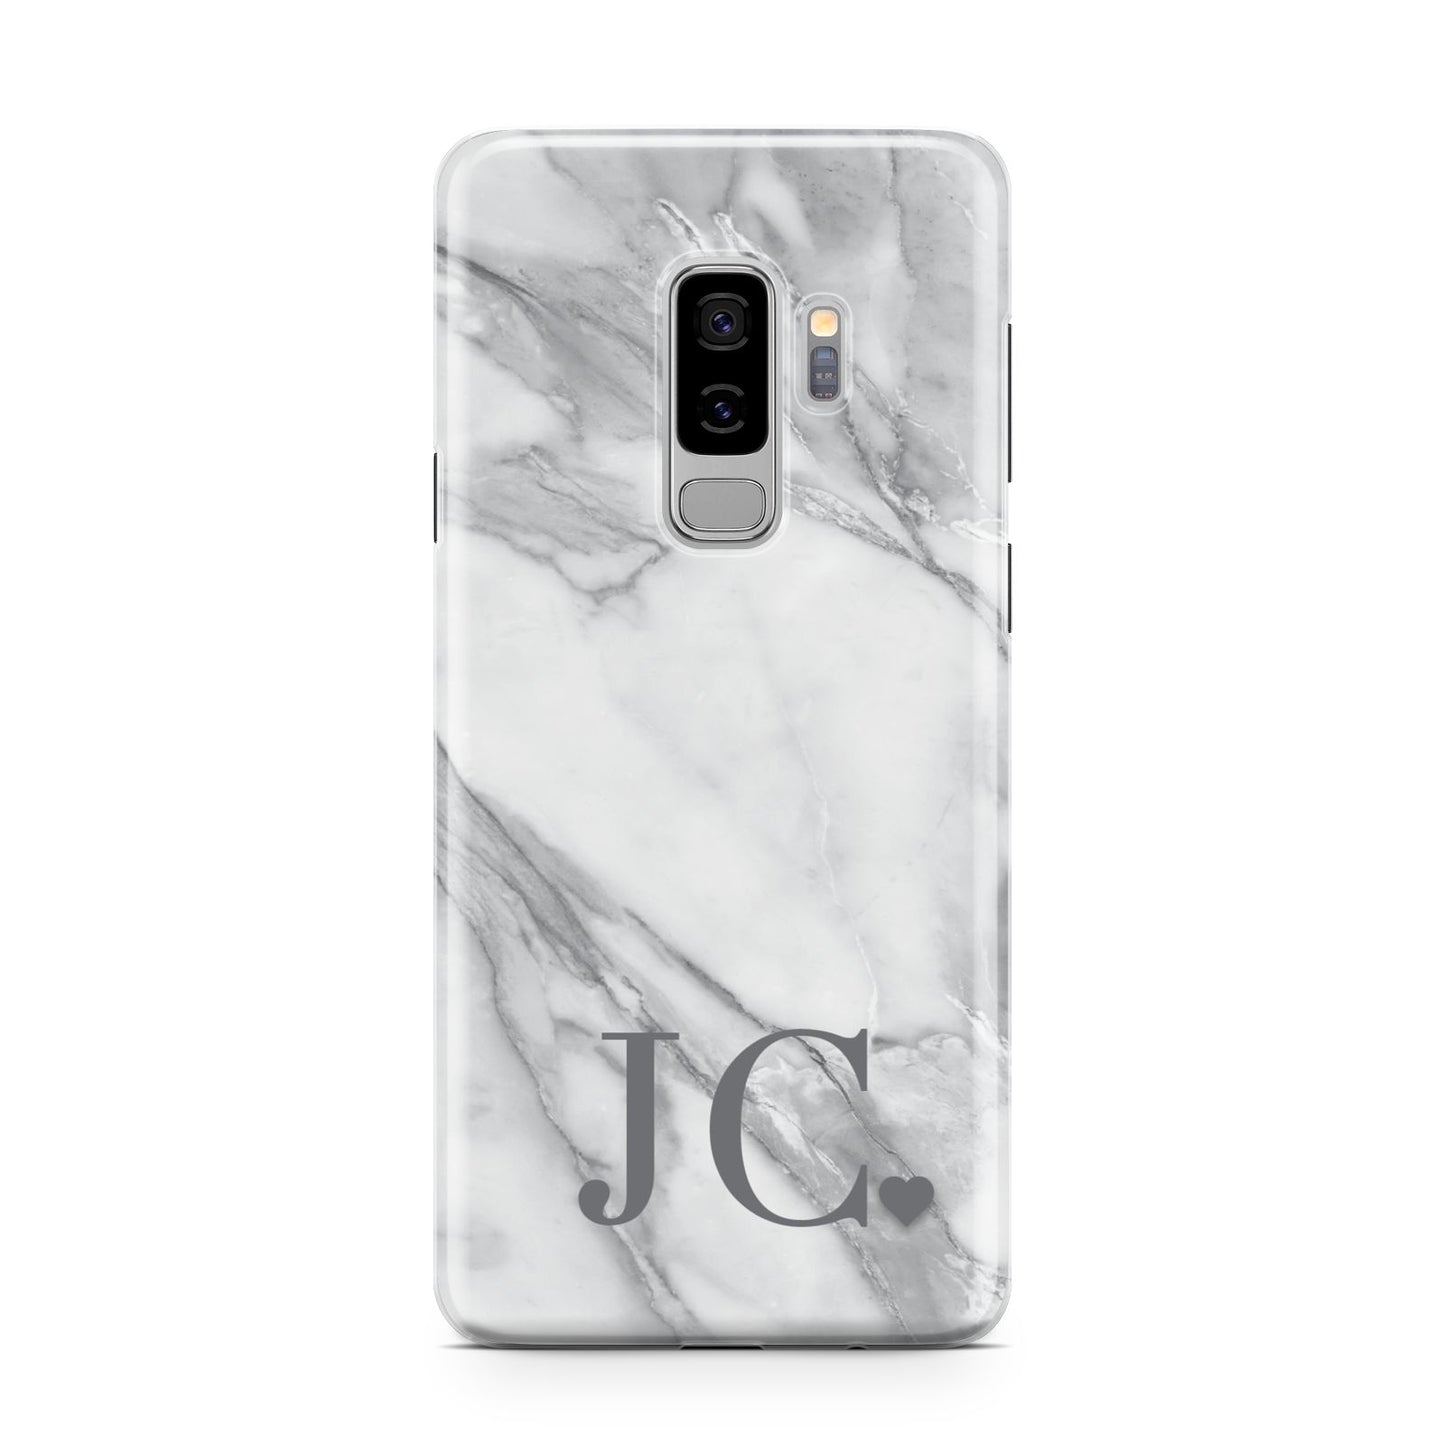 Initials Love Heart Samsung Galaxy S9 Plus Case on Silver phone